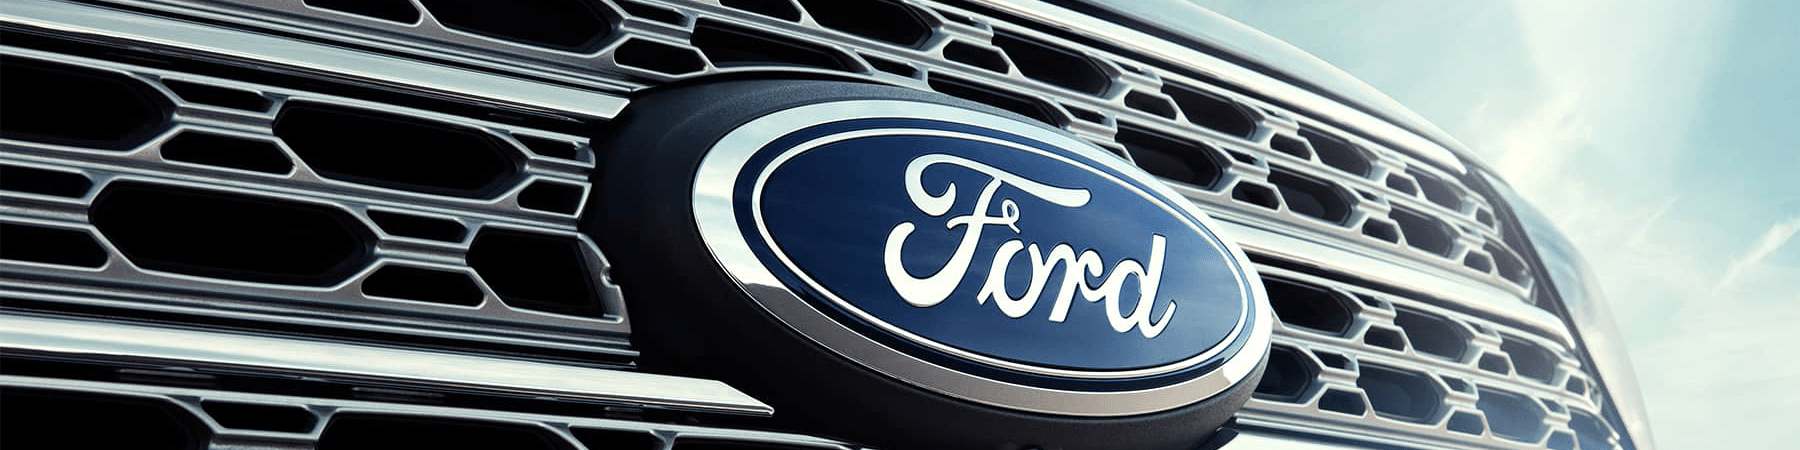 2021 Ford Explorer front grille (1)